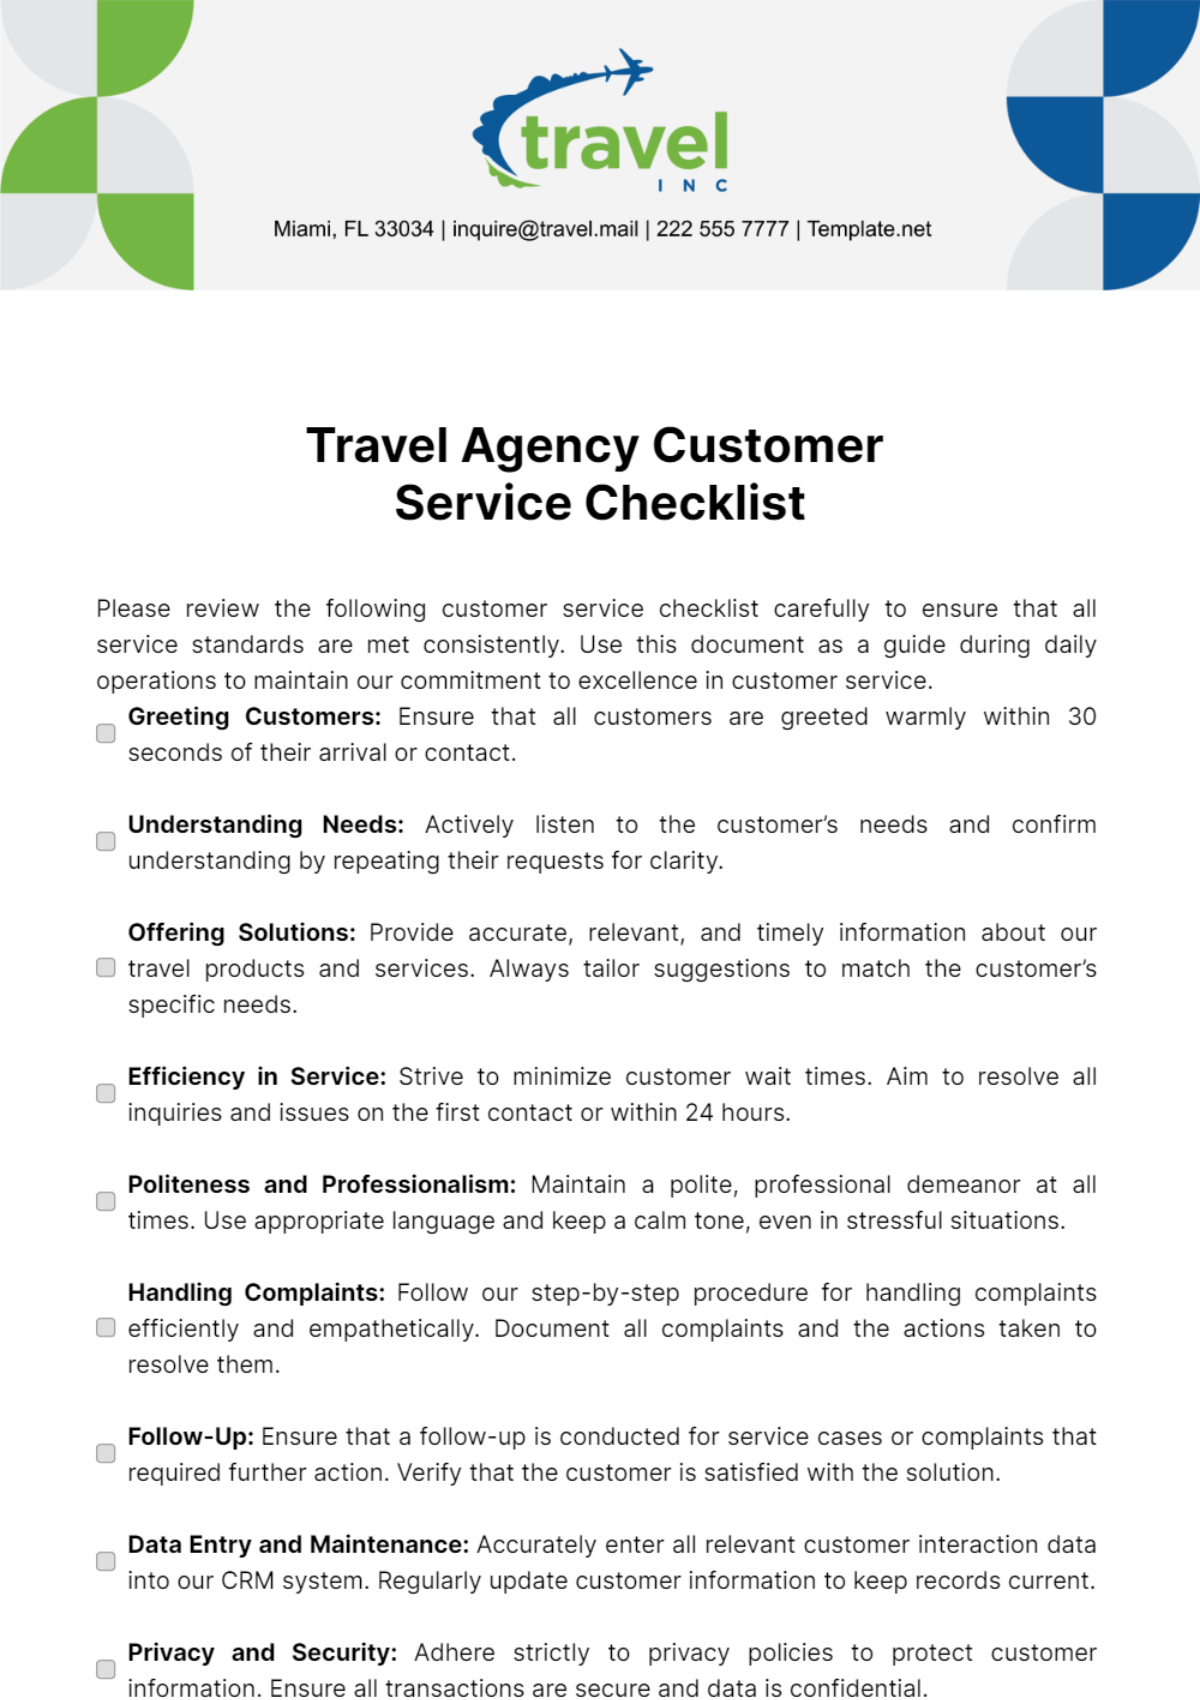 Free Travel Agency Customer Service Checklist Template